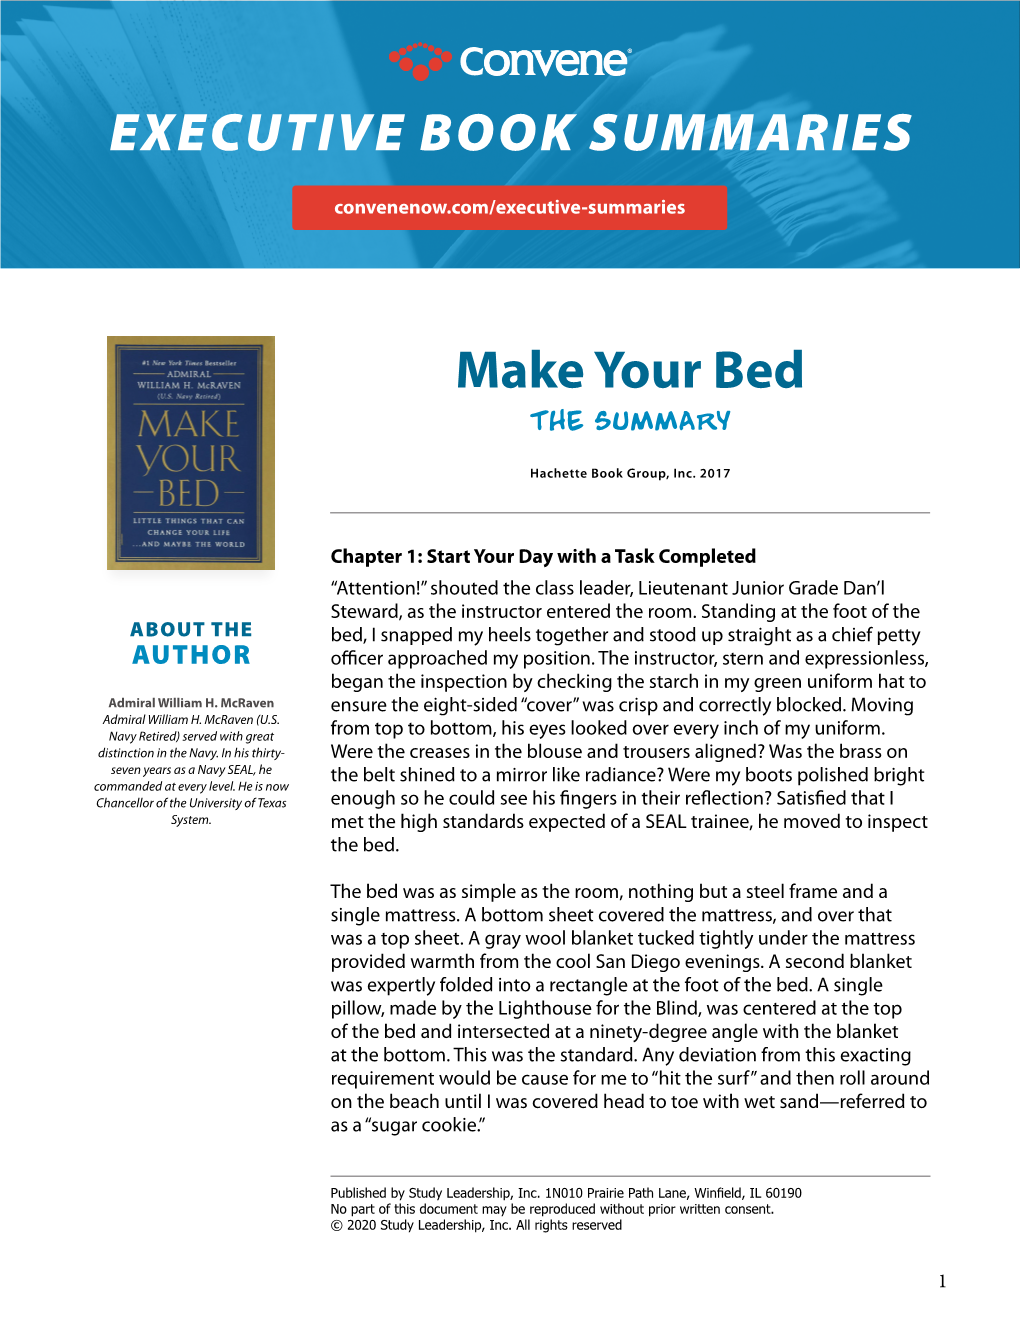 Make Your Bed EXECUTIVE BOOK SUMMARIES